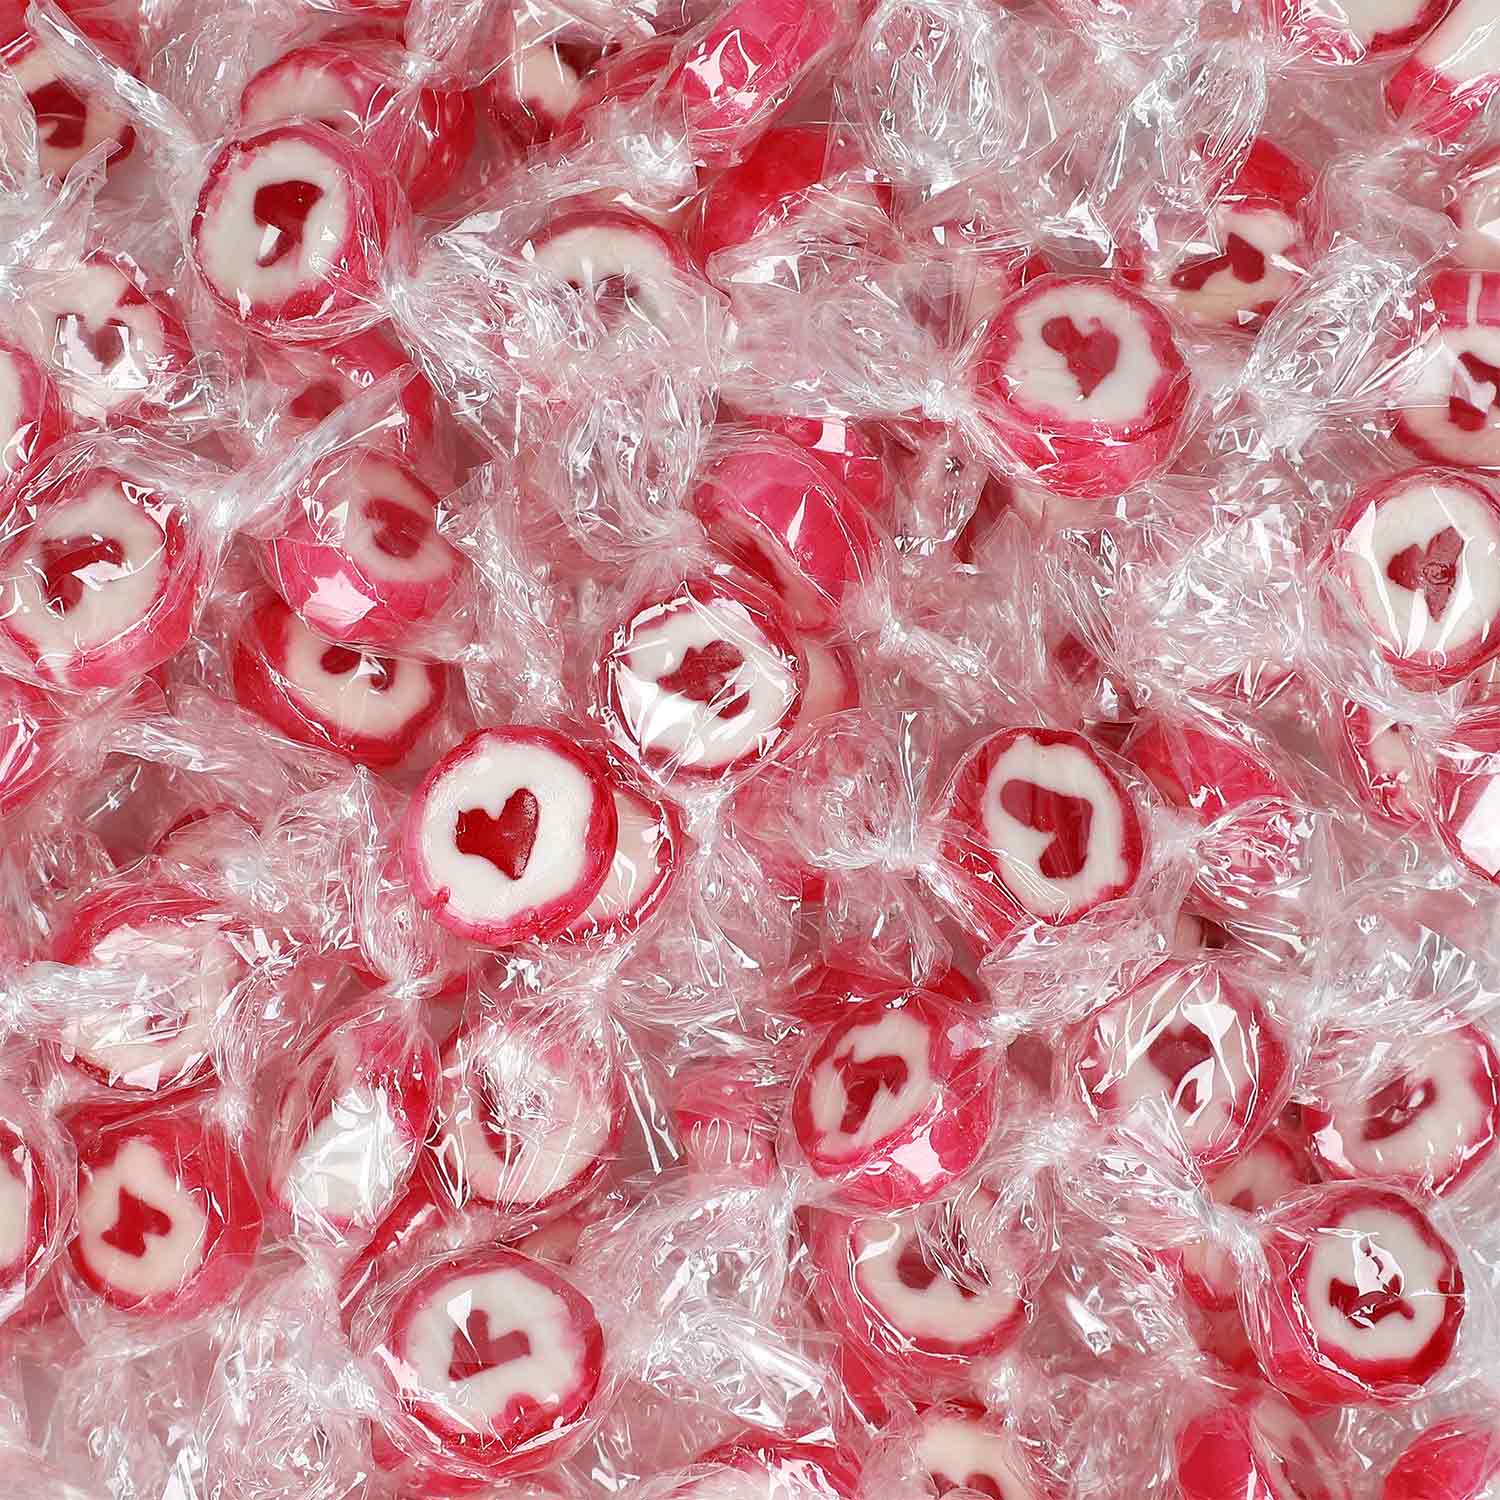 Cool Süße Herzen Bonbons 1kg | Online kaufen im World of Sweets Shop